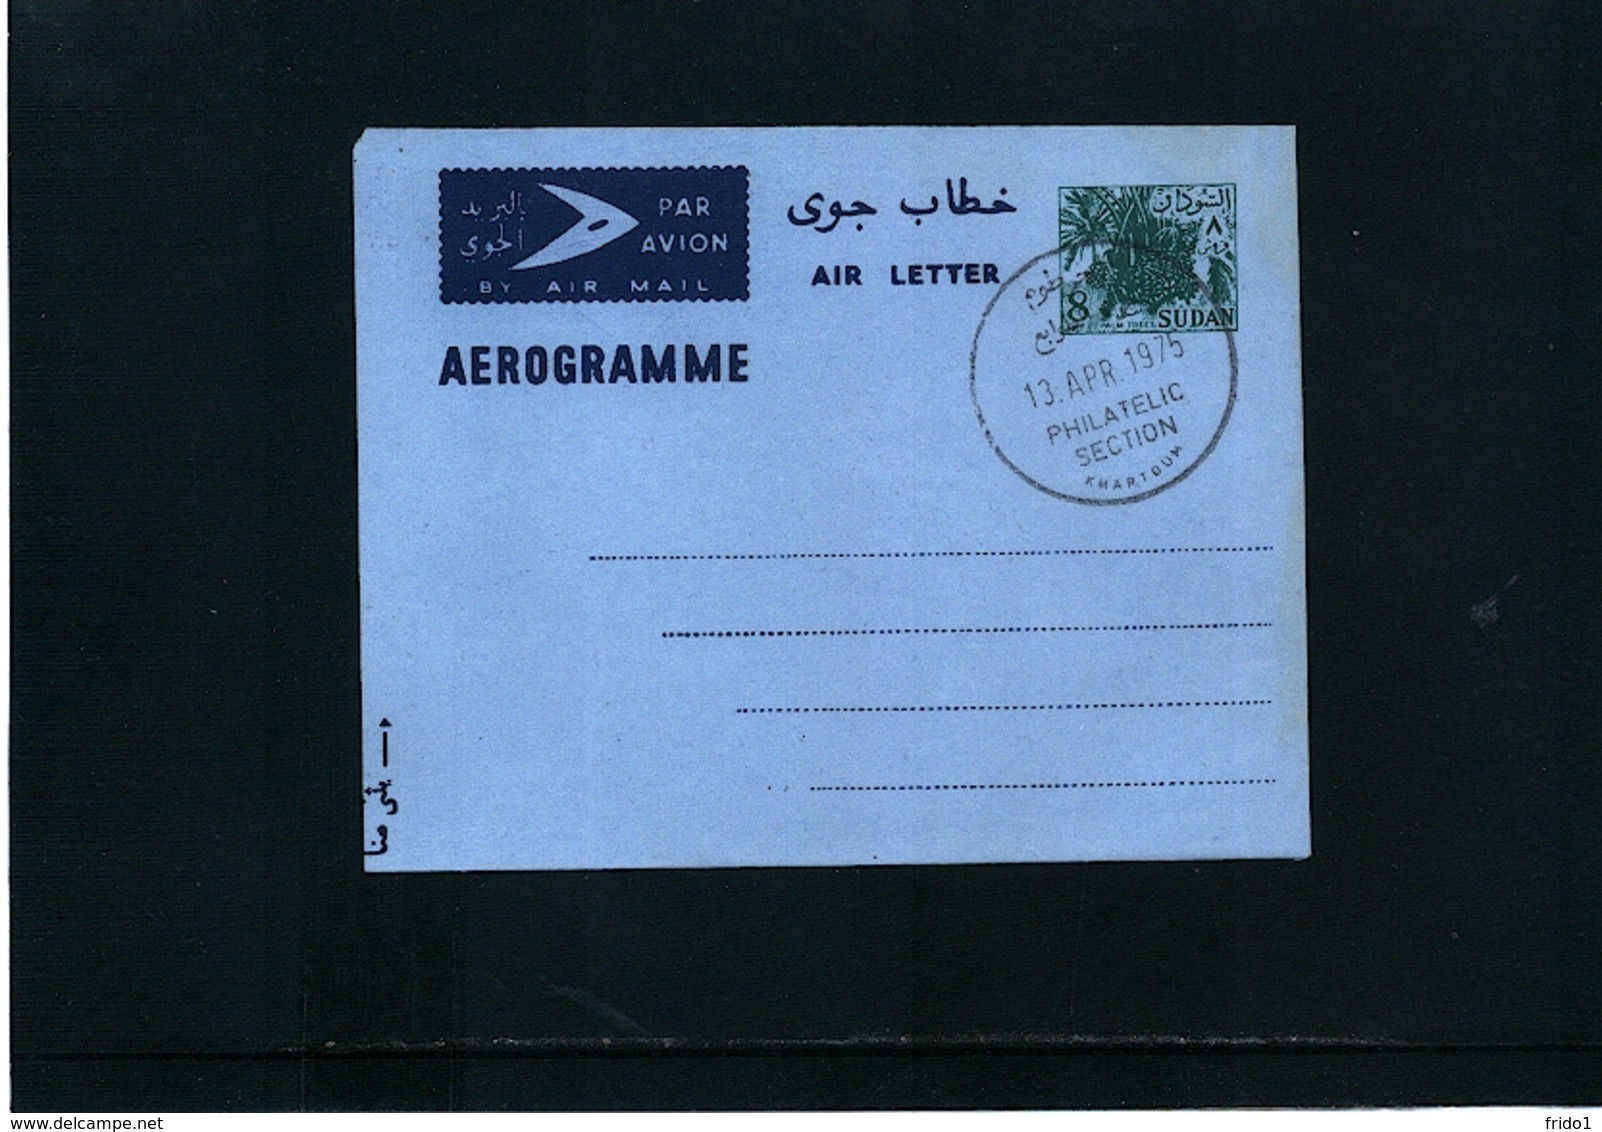 Sudan  1975 Aerogramme / Air Letter Fine Used - Sudan (1954-...)